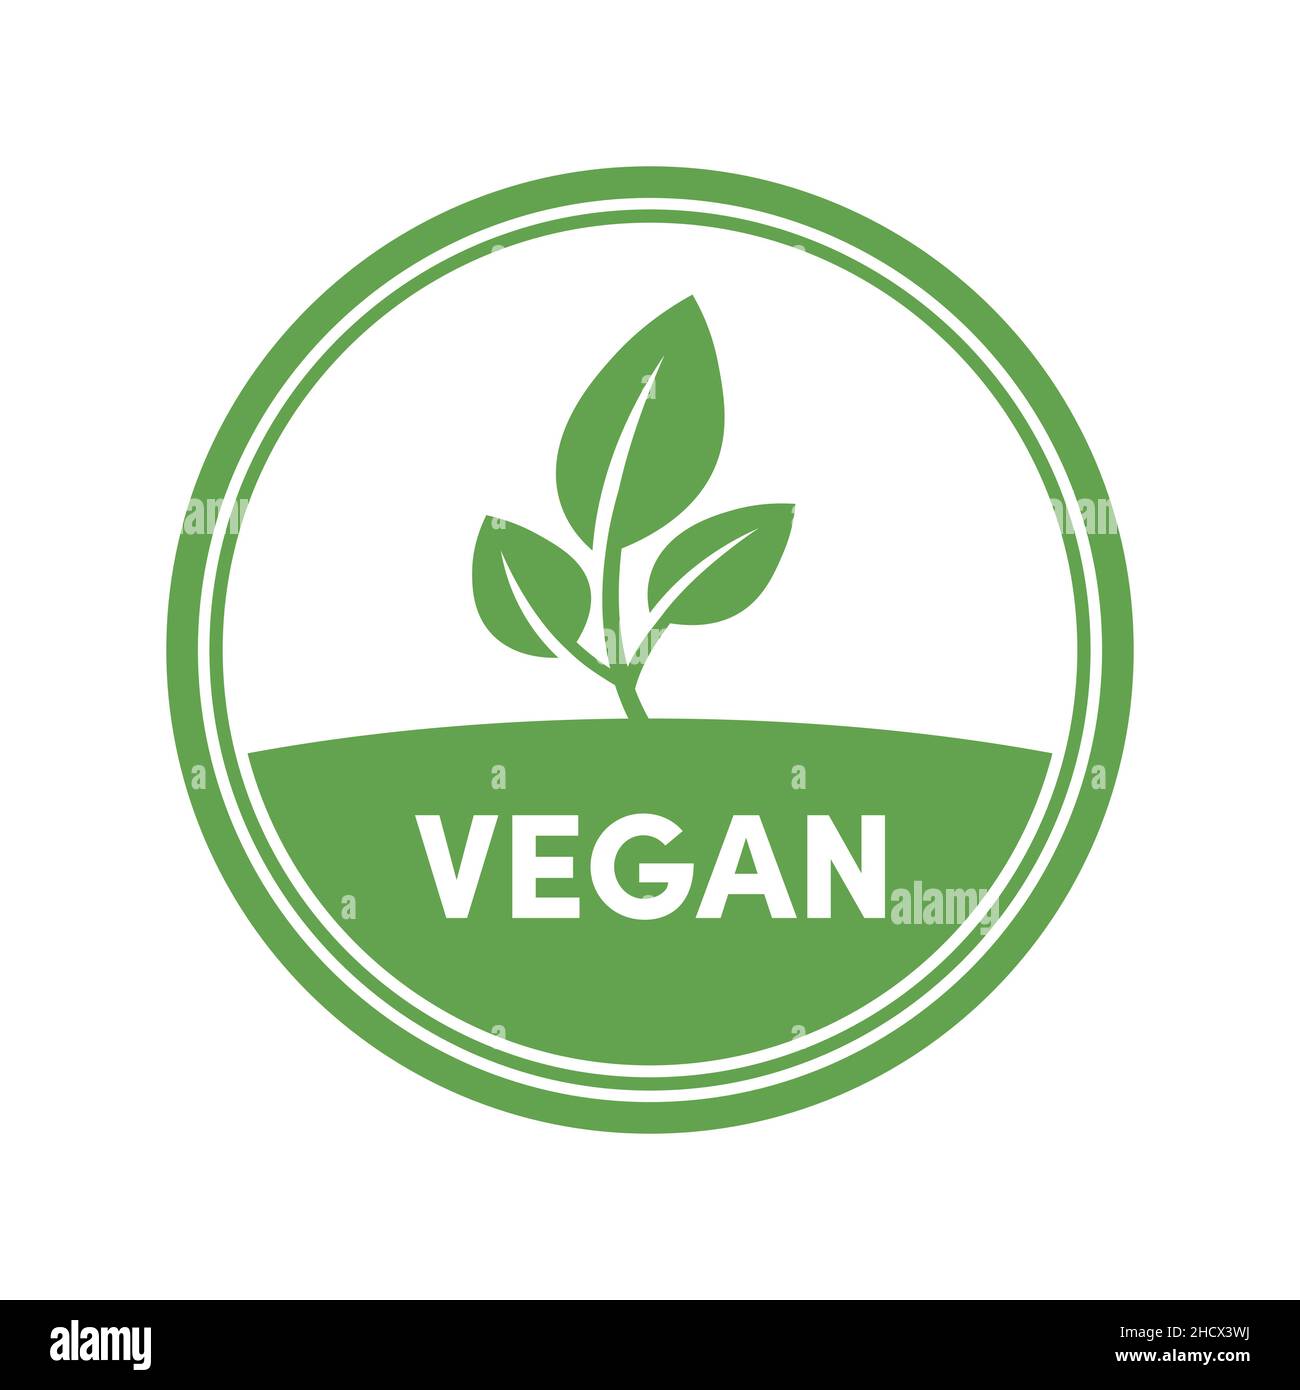 Vegan icon on a white background. Stock Vector